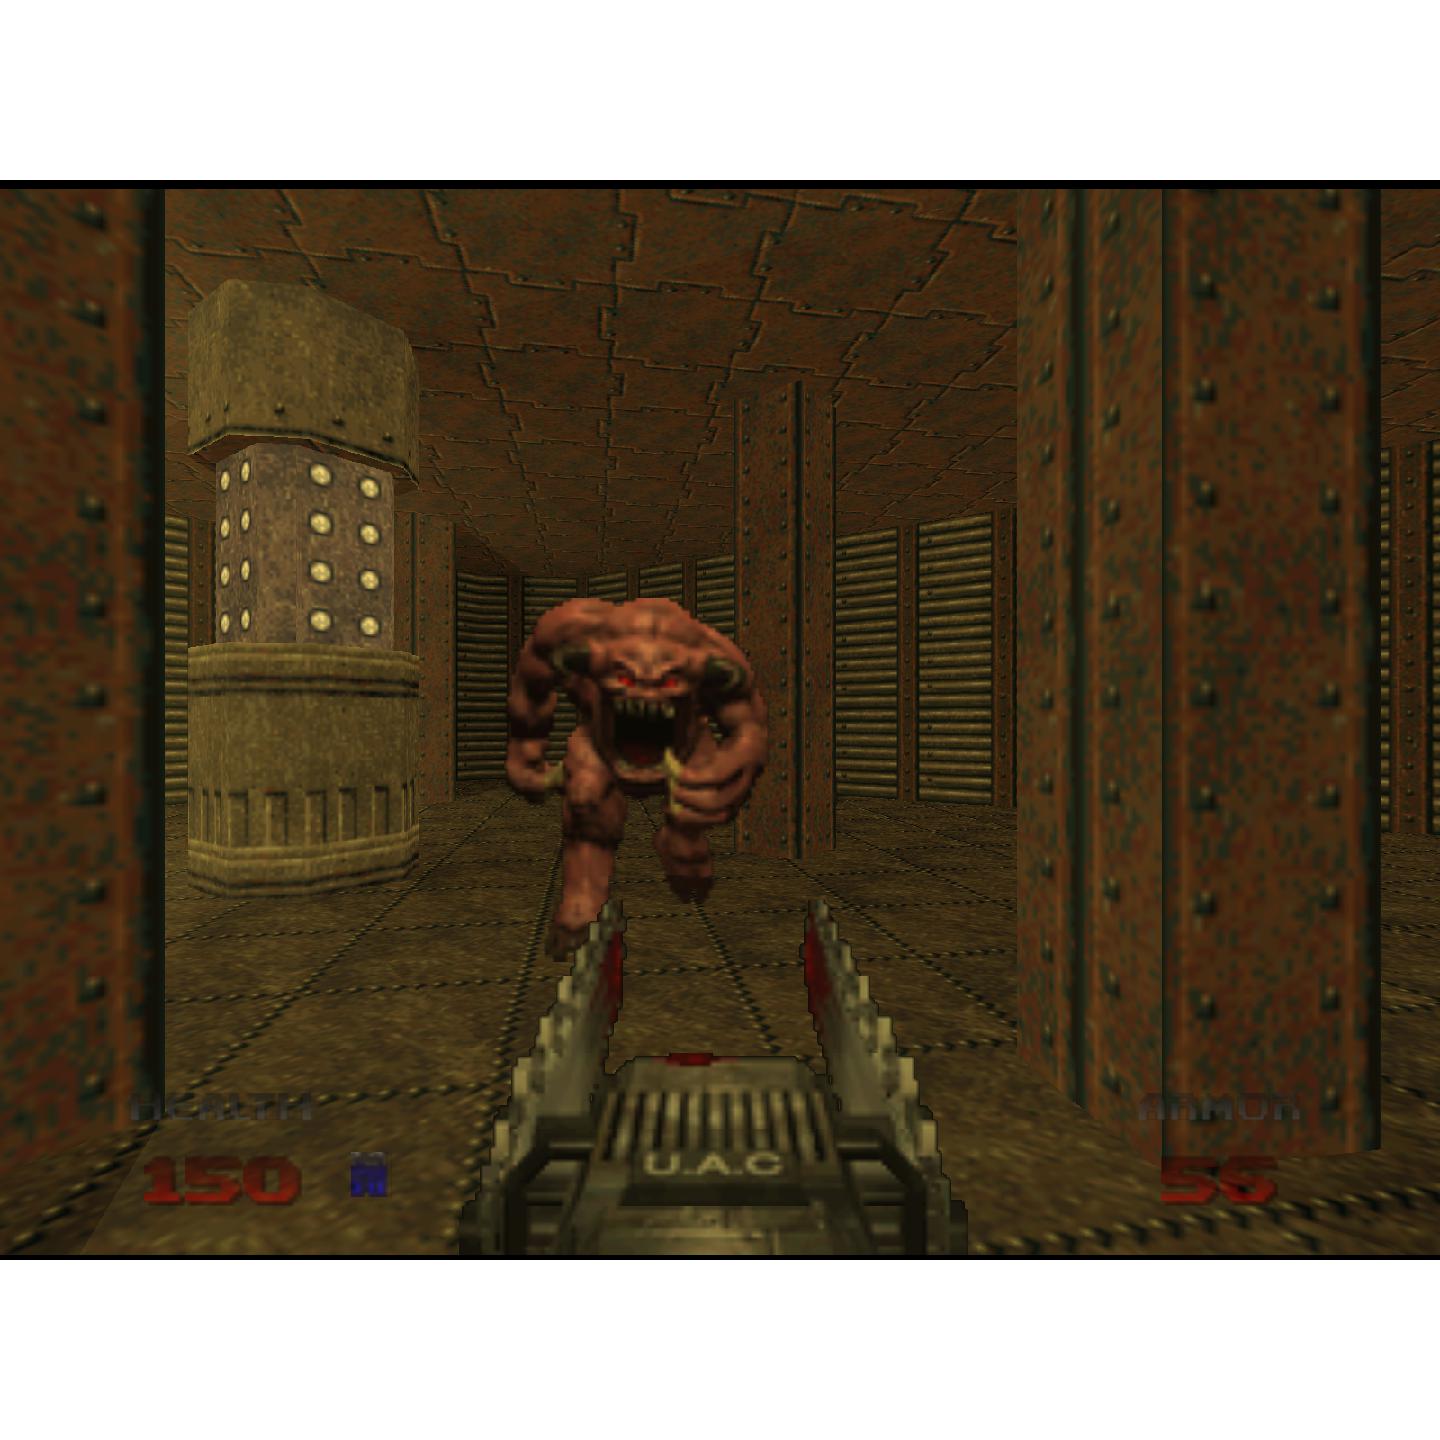 Your Gaming Shop - Doom 64 - Authentic Nintendo 64 (N64) Game Cartridge